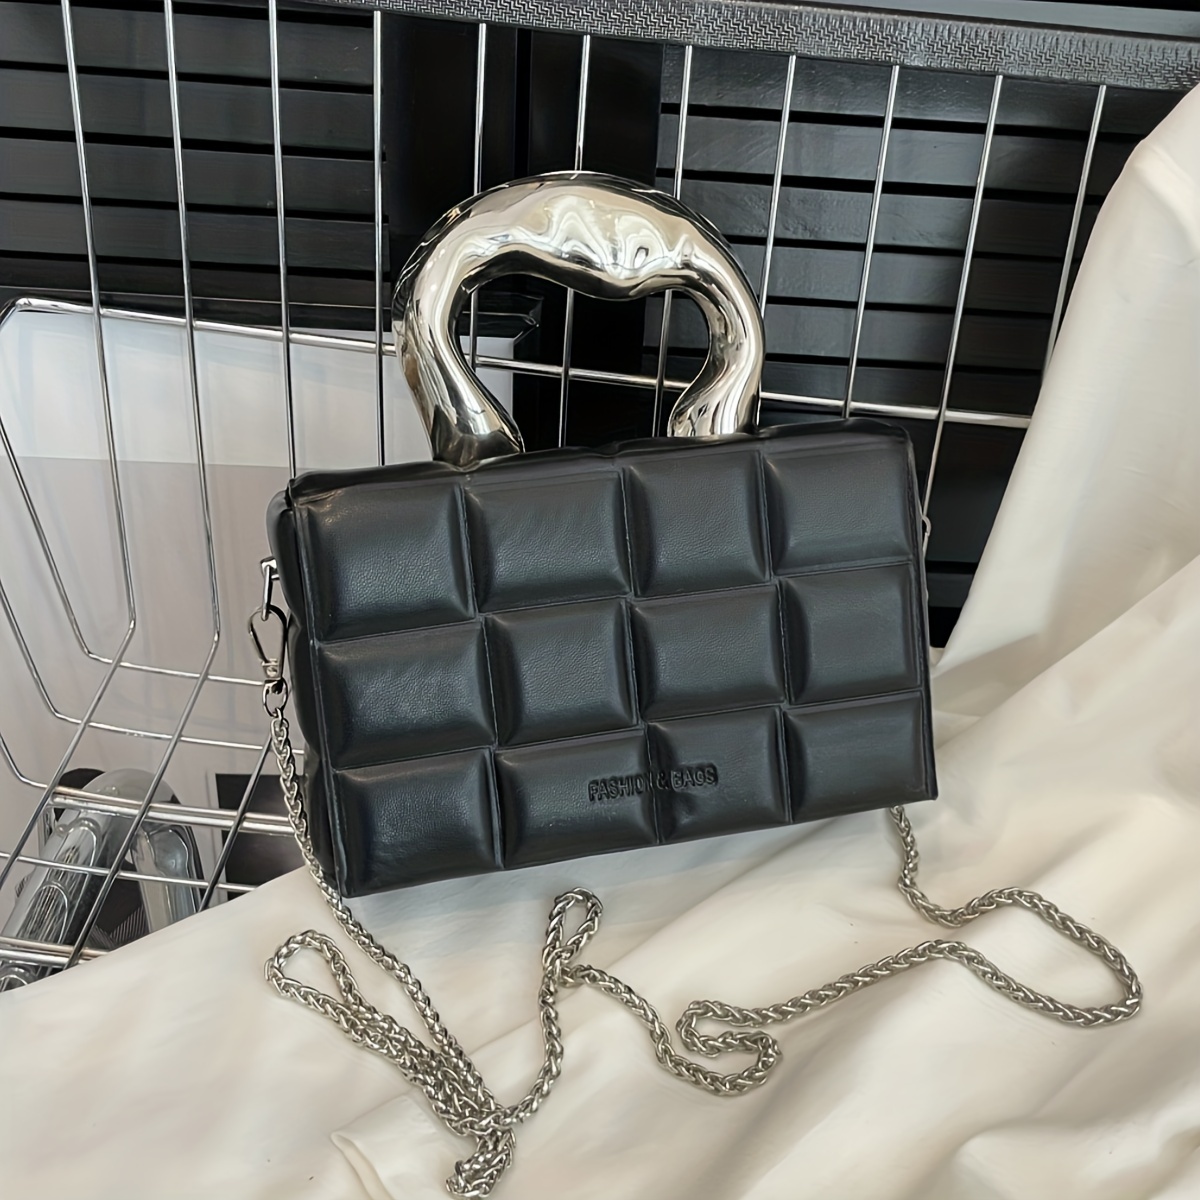 YOUI-GIFTS Women's Square Box Handbag PU Cube Crossbody Shoulder